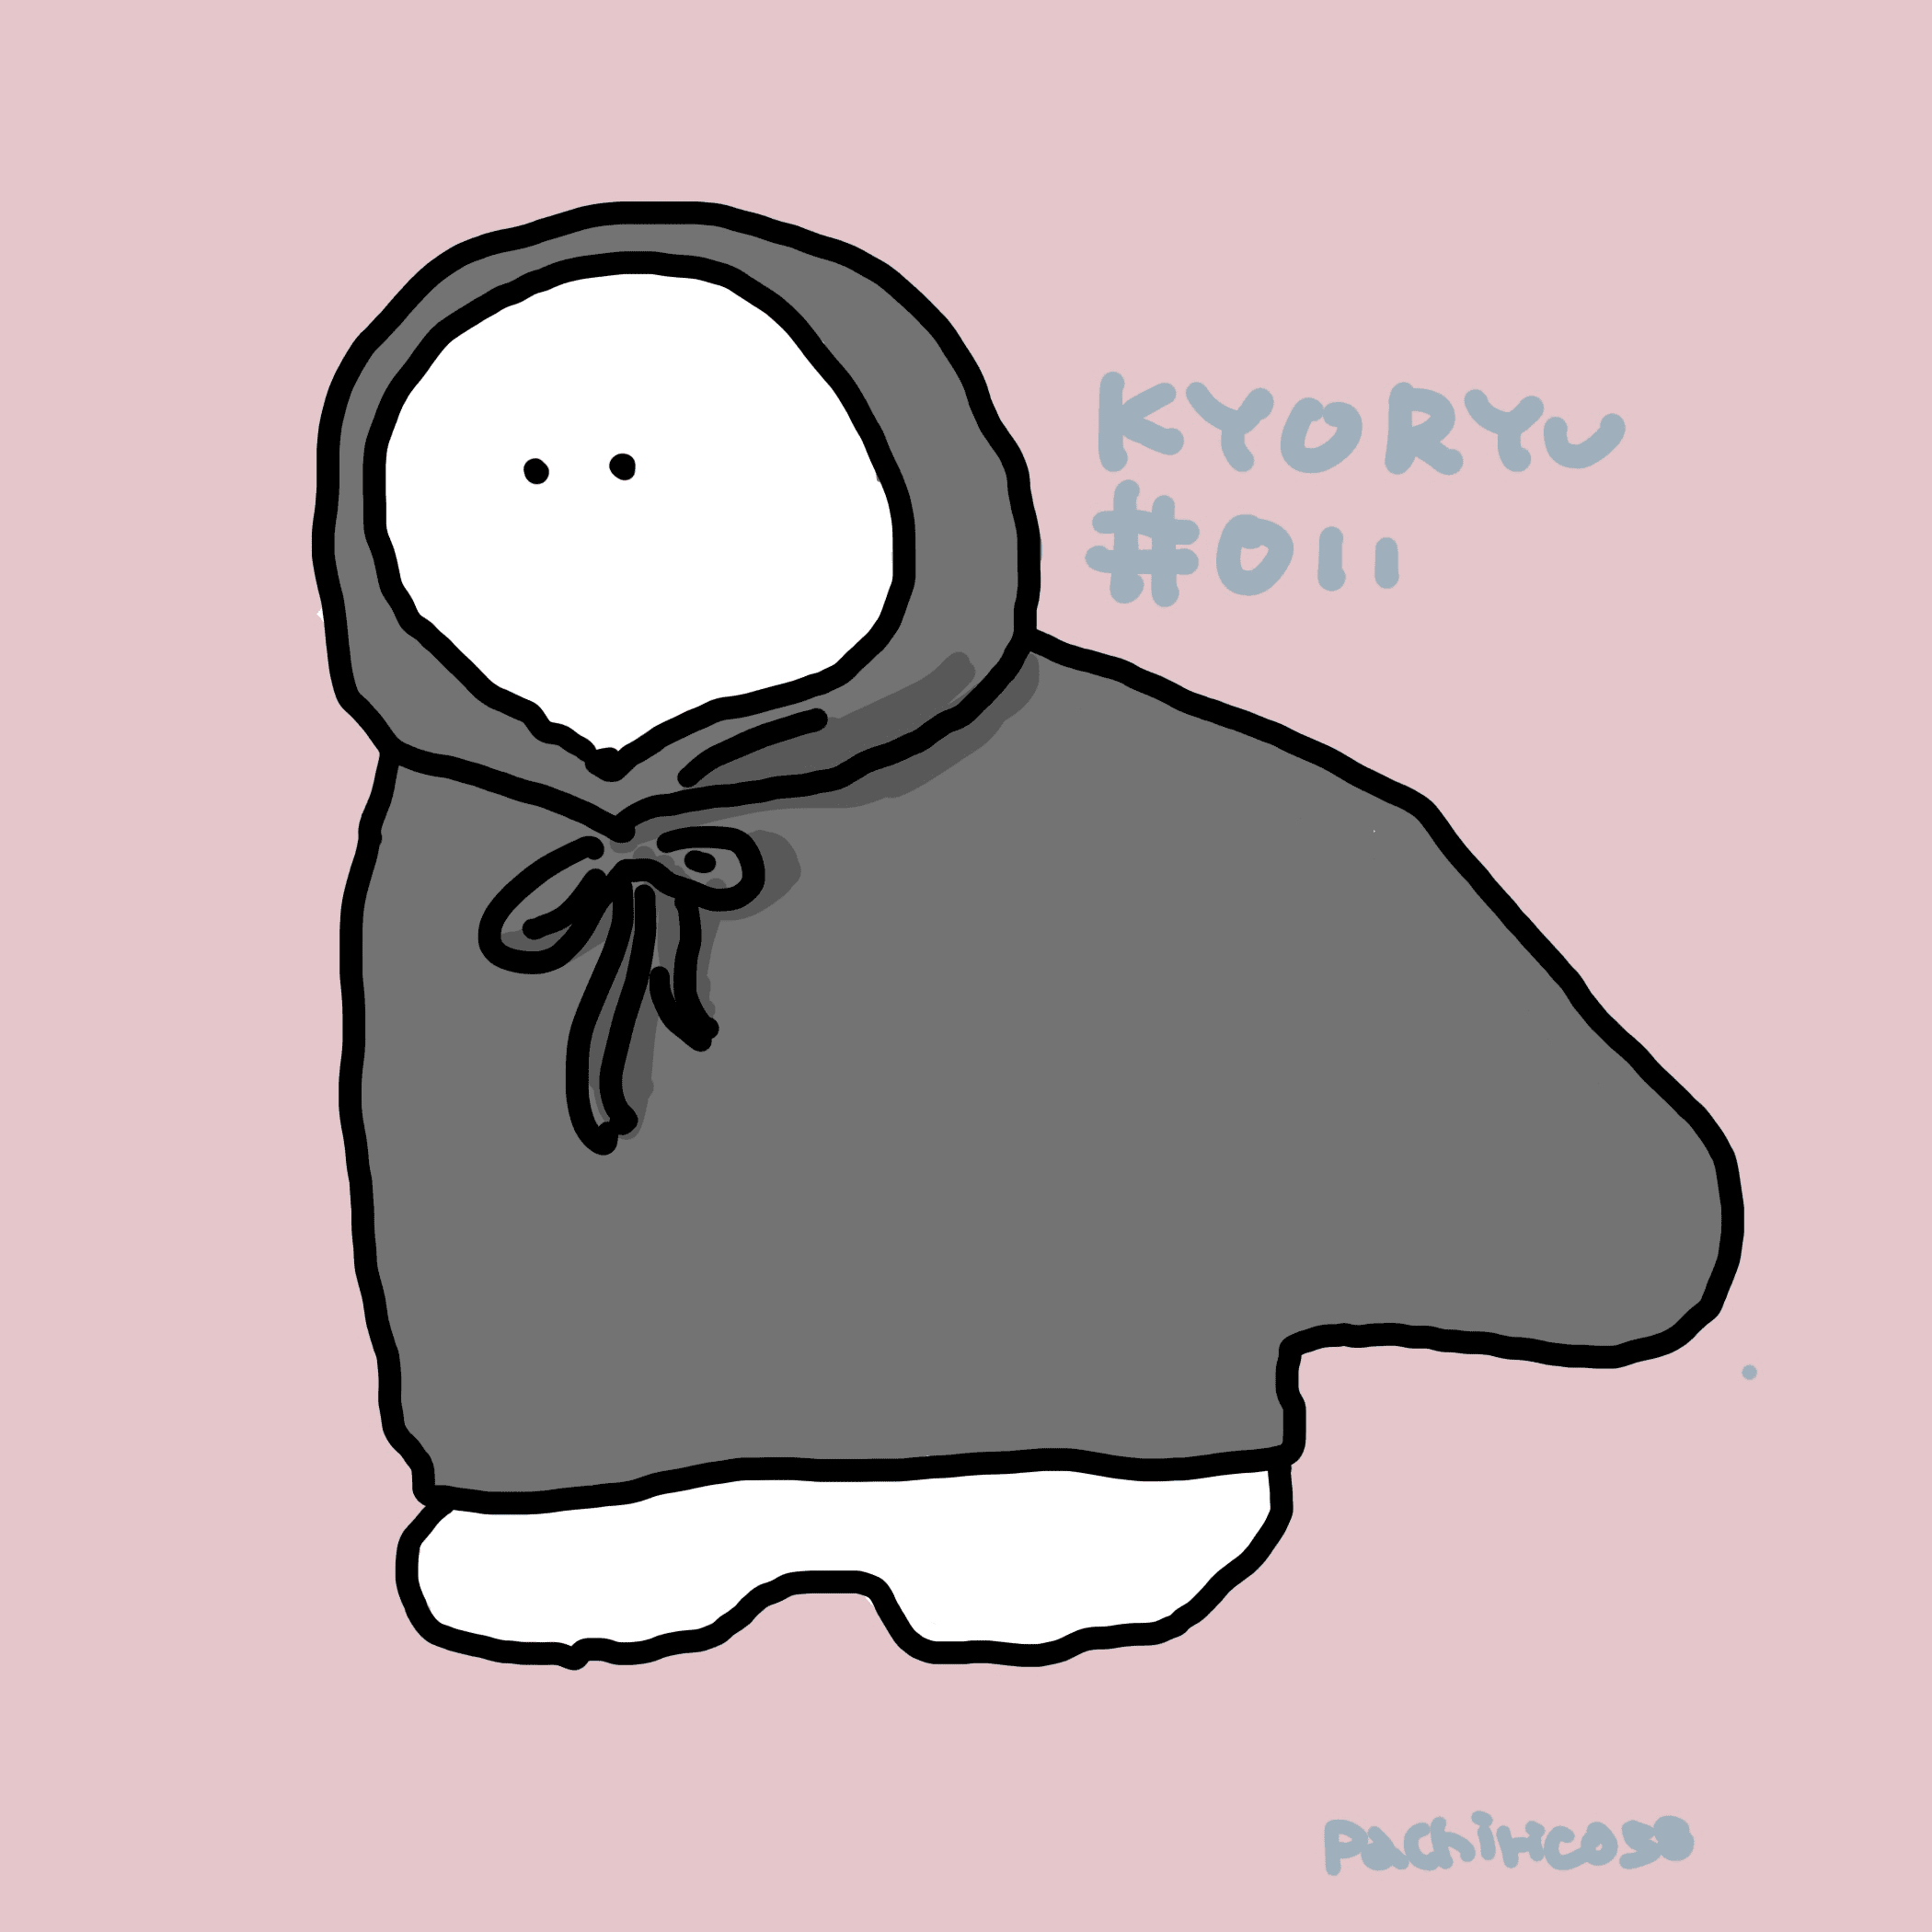 KYORYU#011